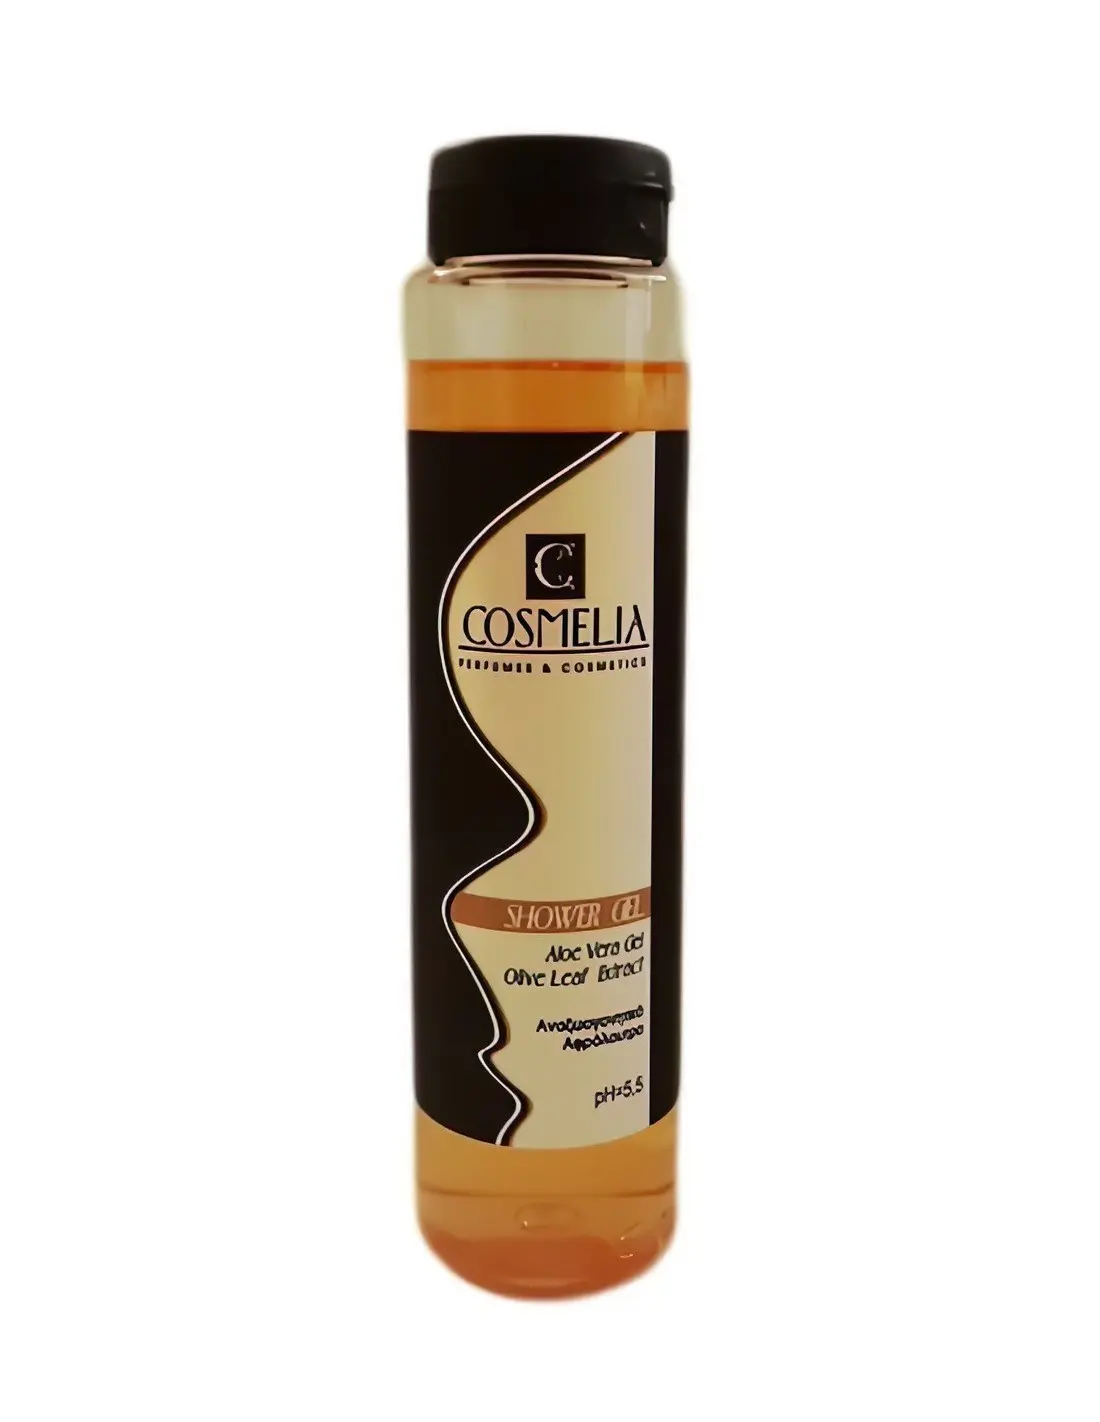 Cosmelia Shower Gel Aloe Vera & Olive Leaf Extract Chanson Black 300ml